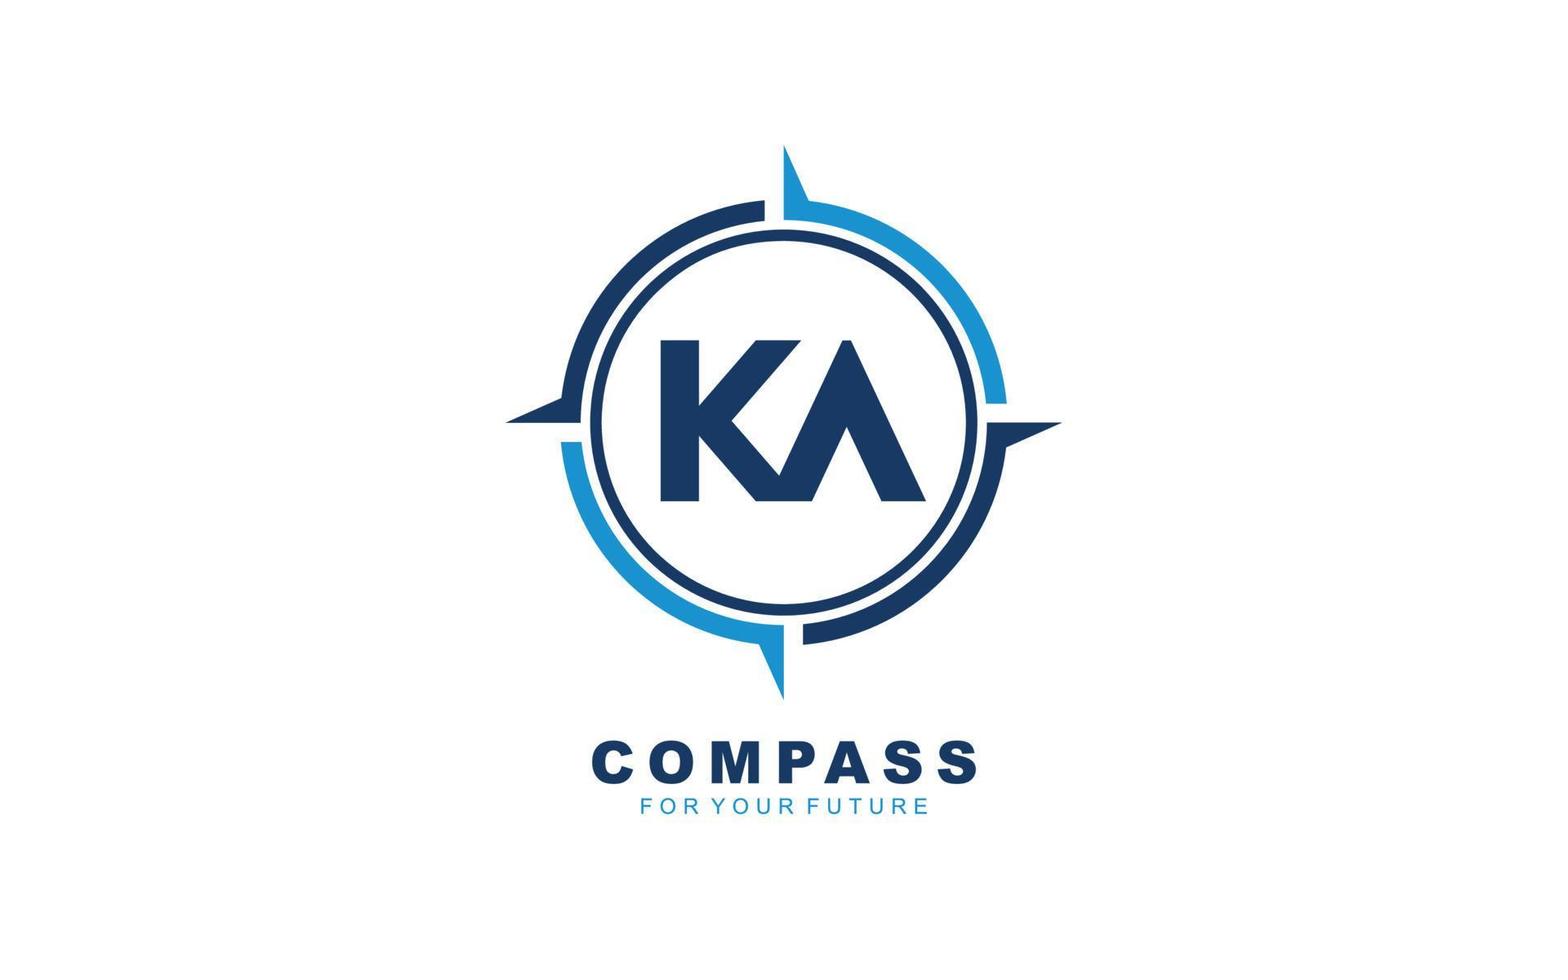 KA logo NAVIGATION for branding company. COMPASS template vector illustration for your brand.